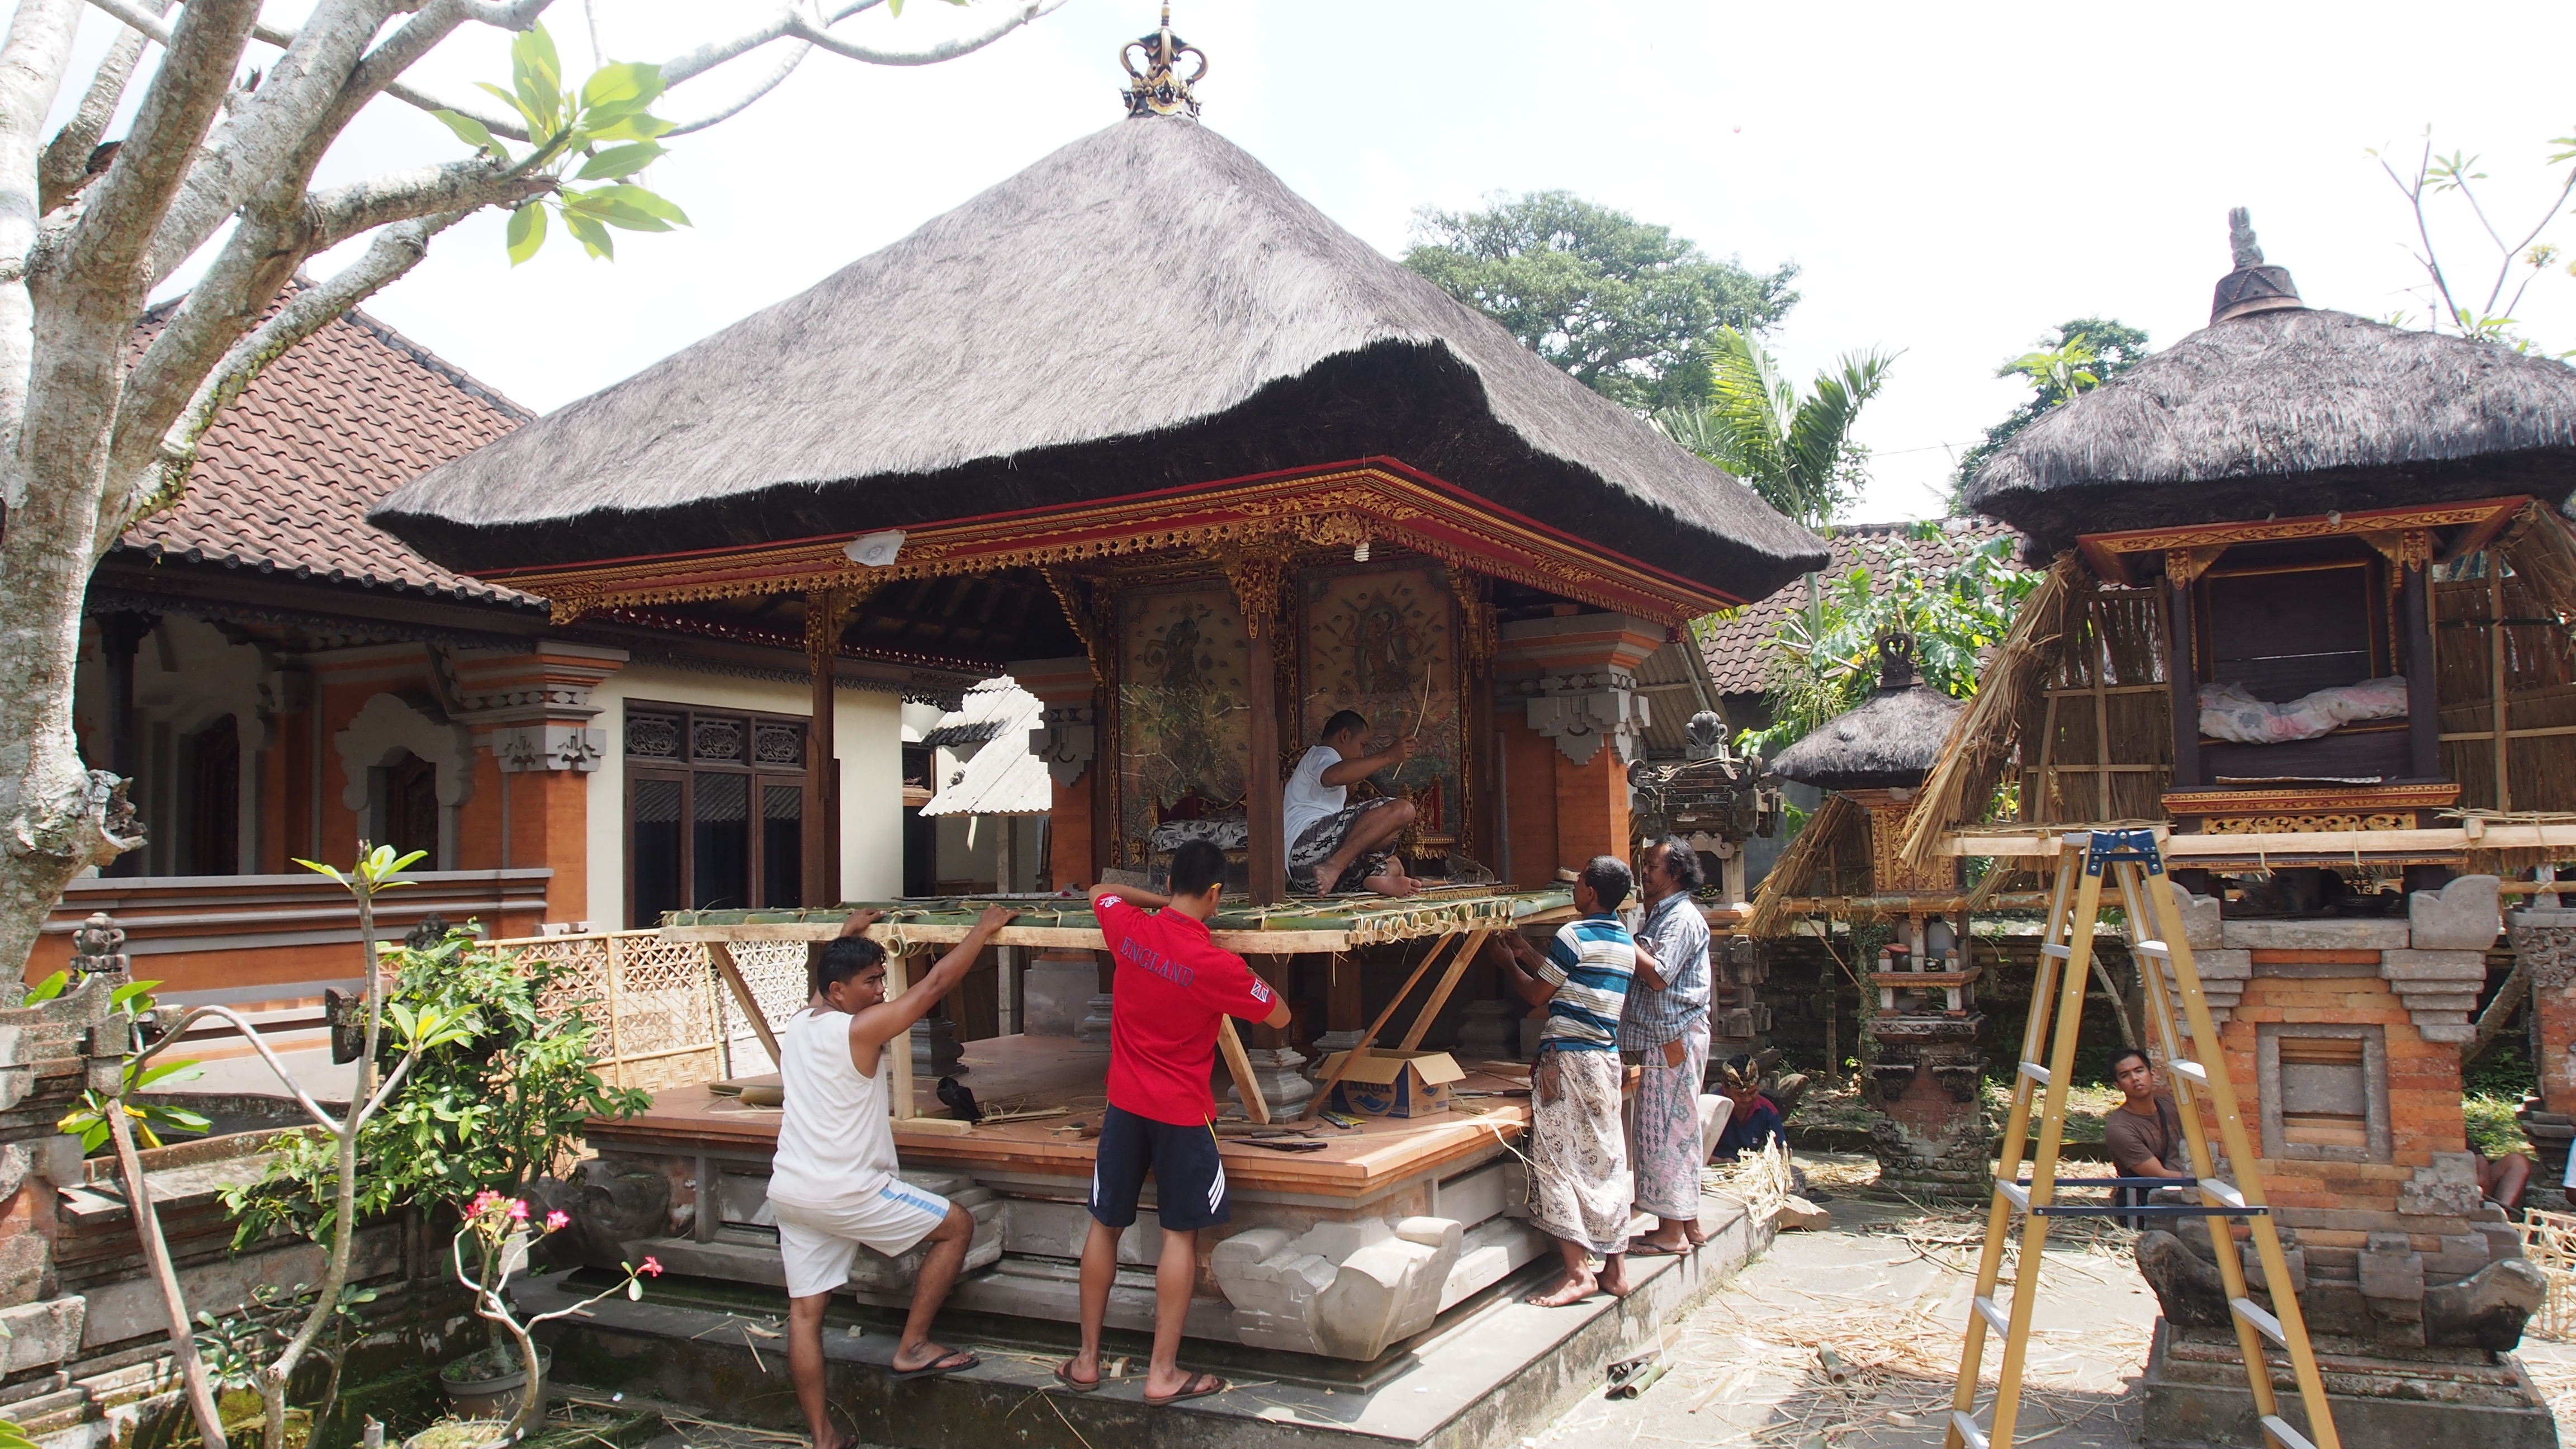  Rumah  Tradisional Bali  aditoka